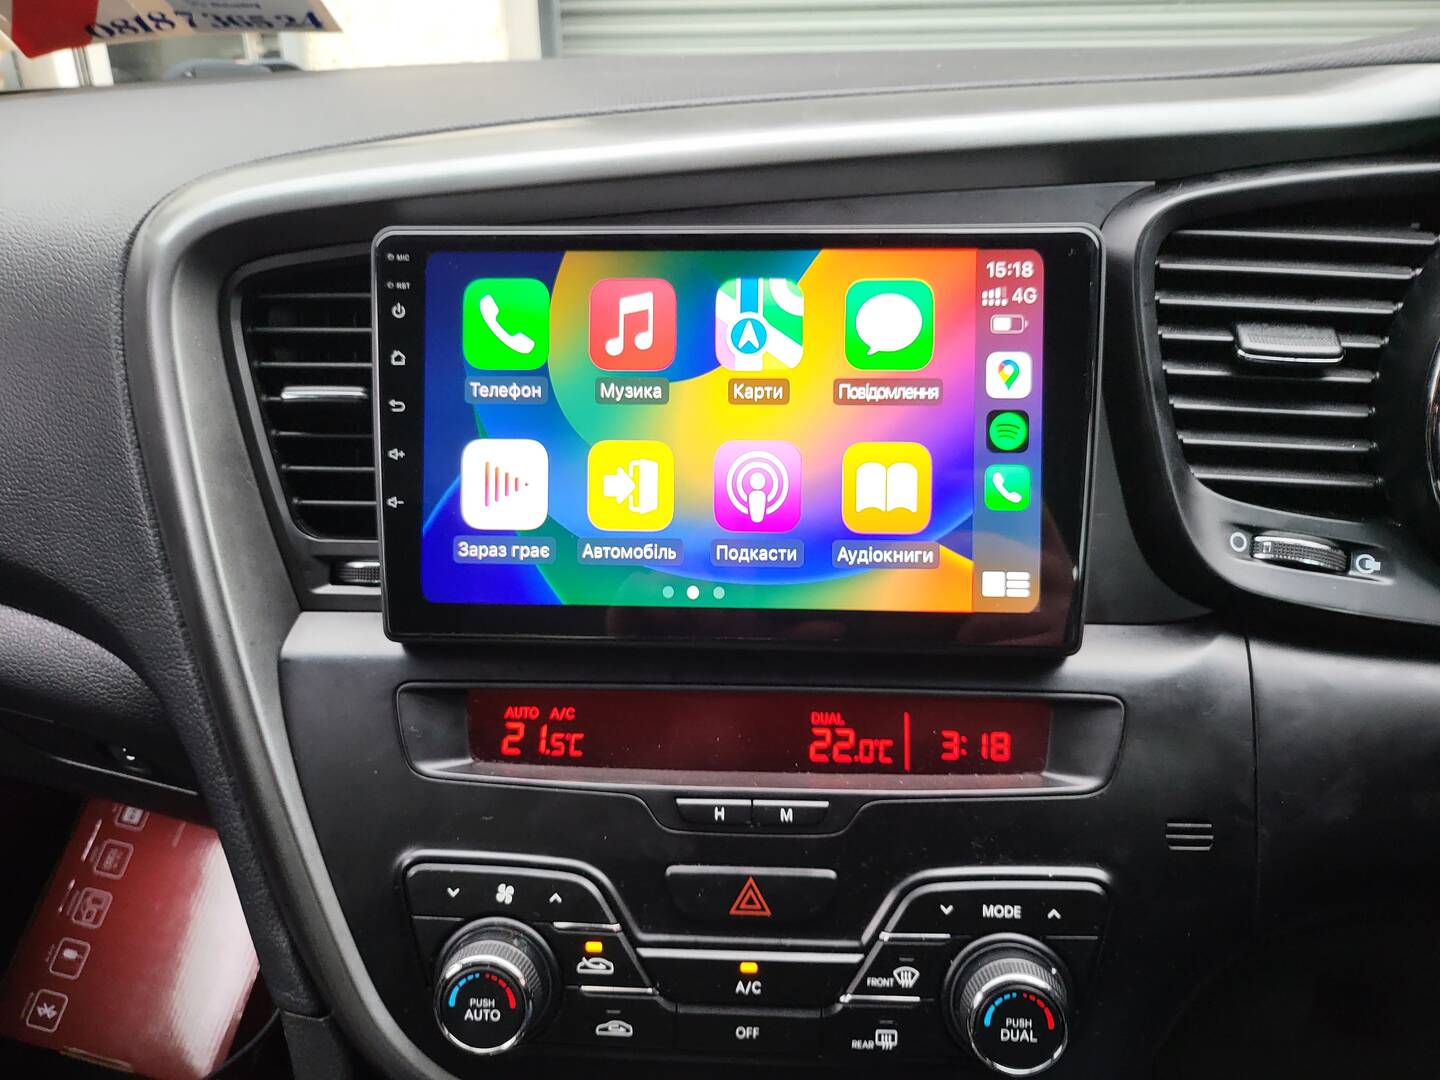 20230201 151839 scaled - Radio King Ireland - Android Car Radios and CarPlay Systems